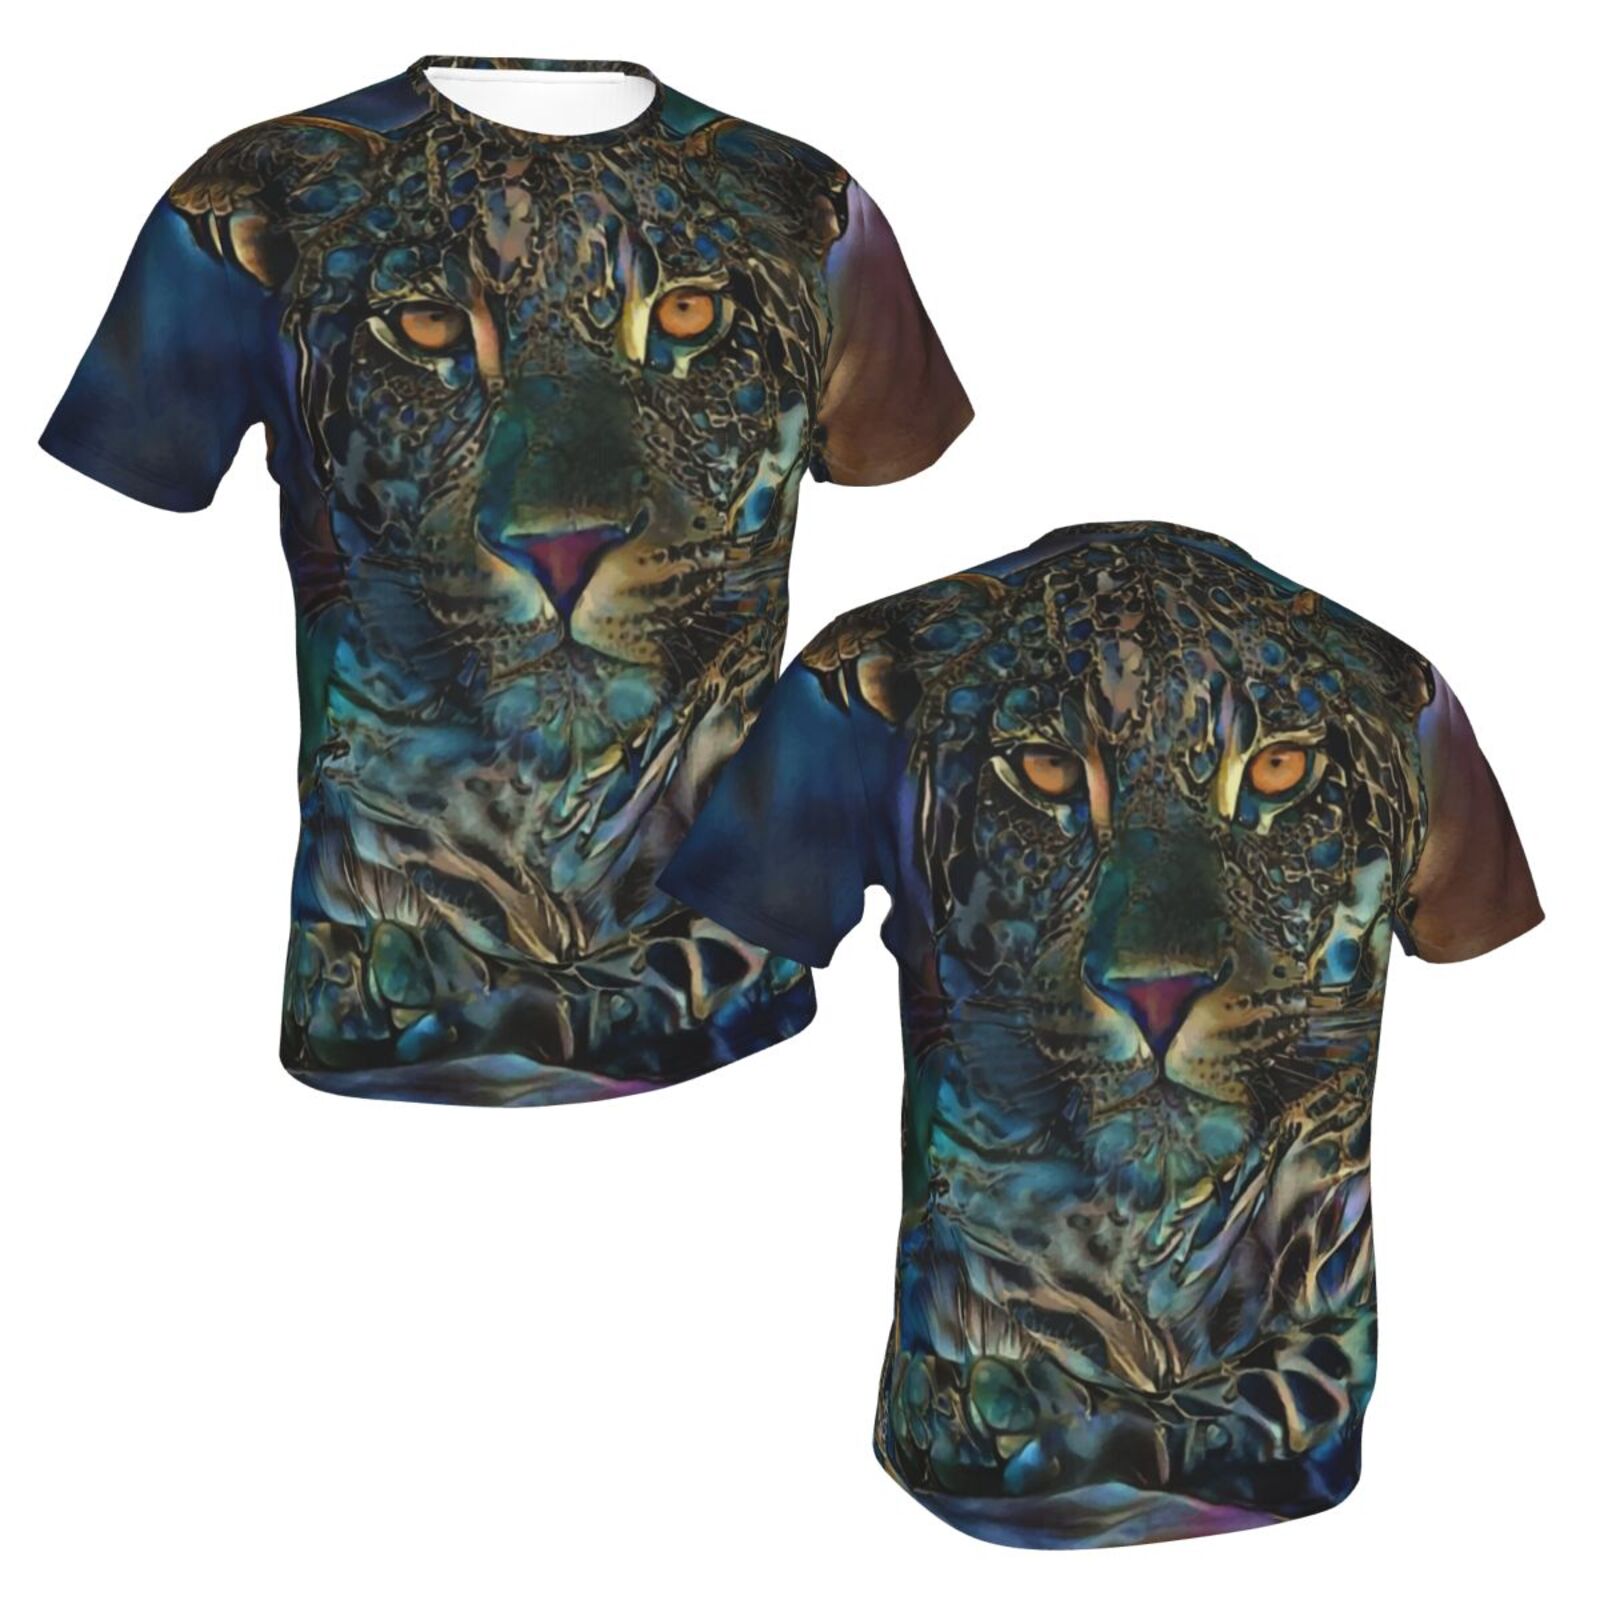 Camiseta Chile Clásica Laria Leopard Elementos De Técnica Mixta